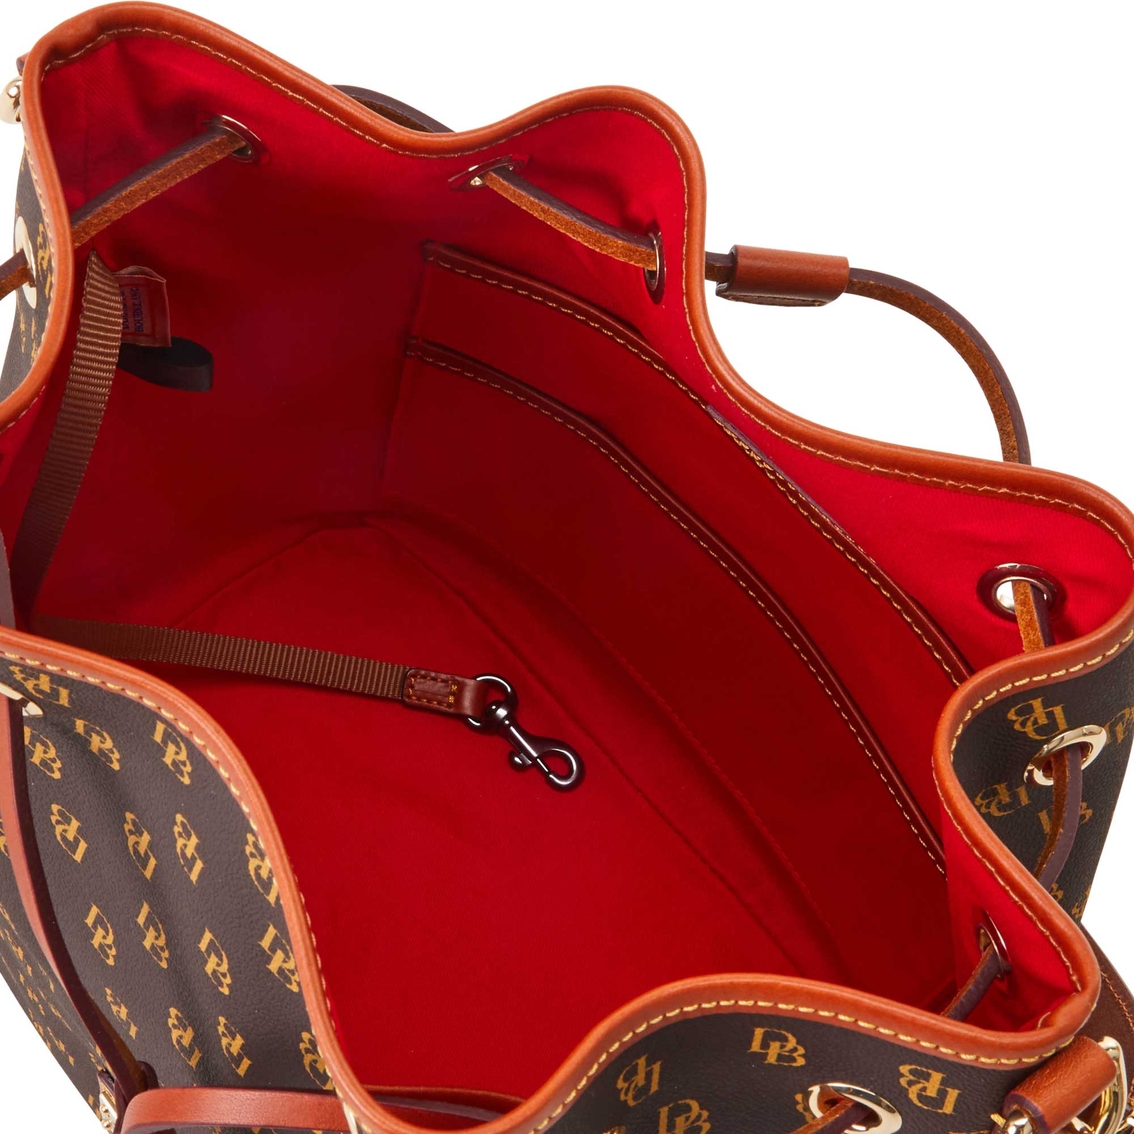 Dooney & Bourke Gretta Drawstring Handbag - Image 3 of 3